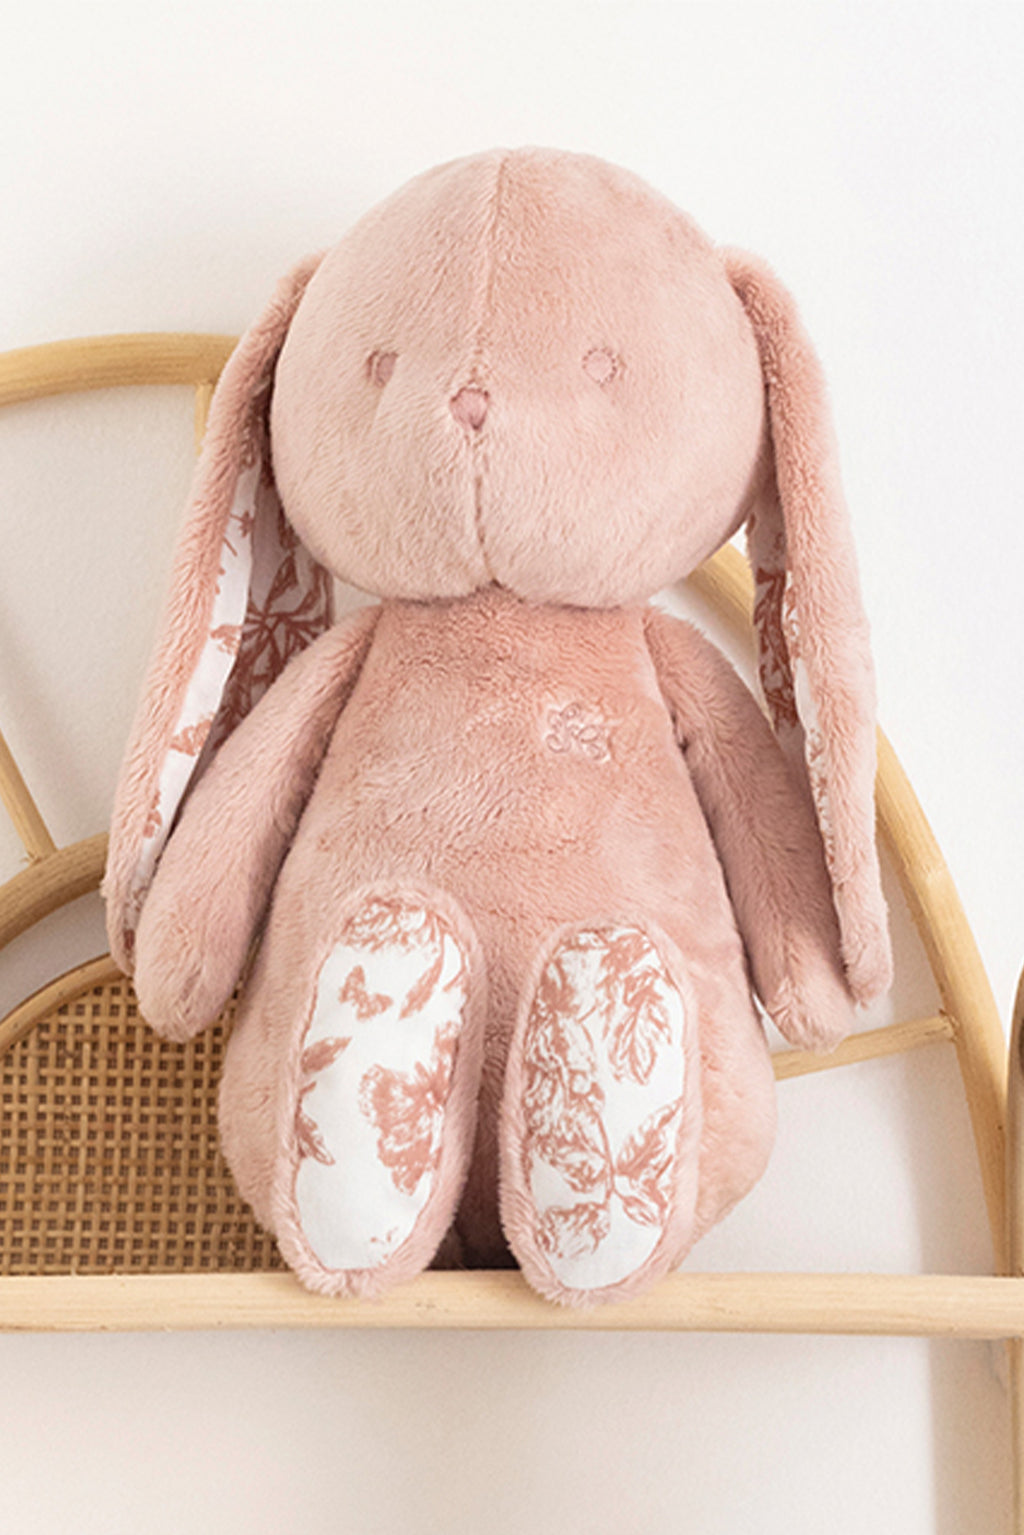 Augustin the rabbit - Print inspiration Toile de Jouy Pink 25cm